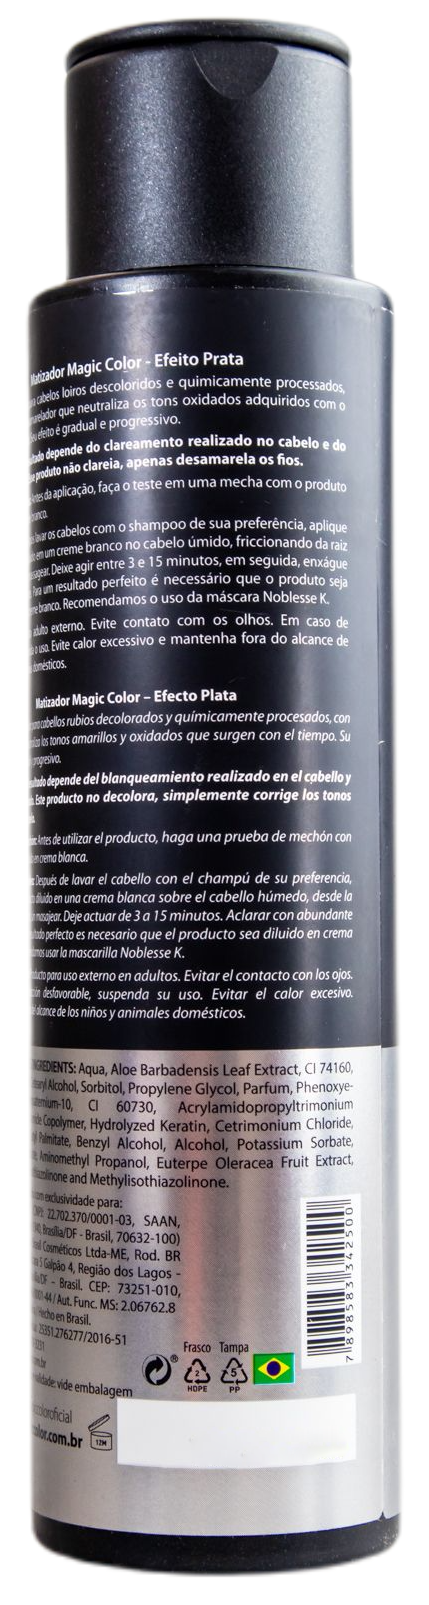 Magic Color Brazilian Keratin Treatment Silver Effect Traditional Hair Treatment 3D Tinting Gloss 500ml - Magic Color